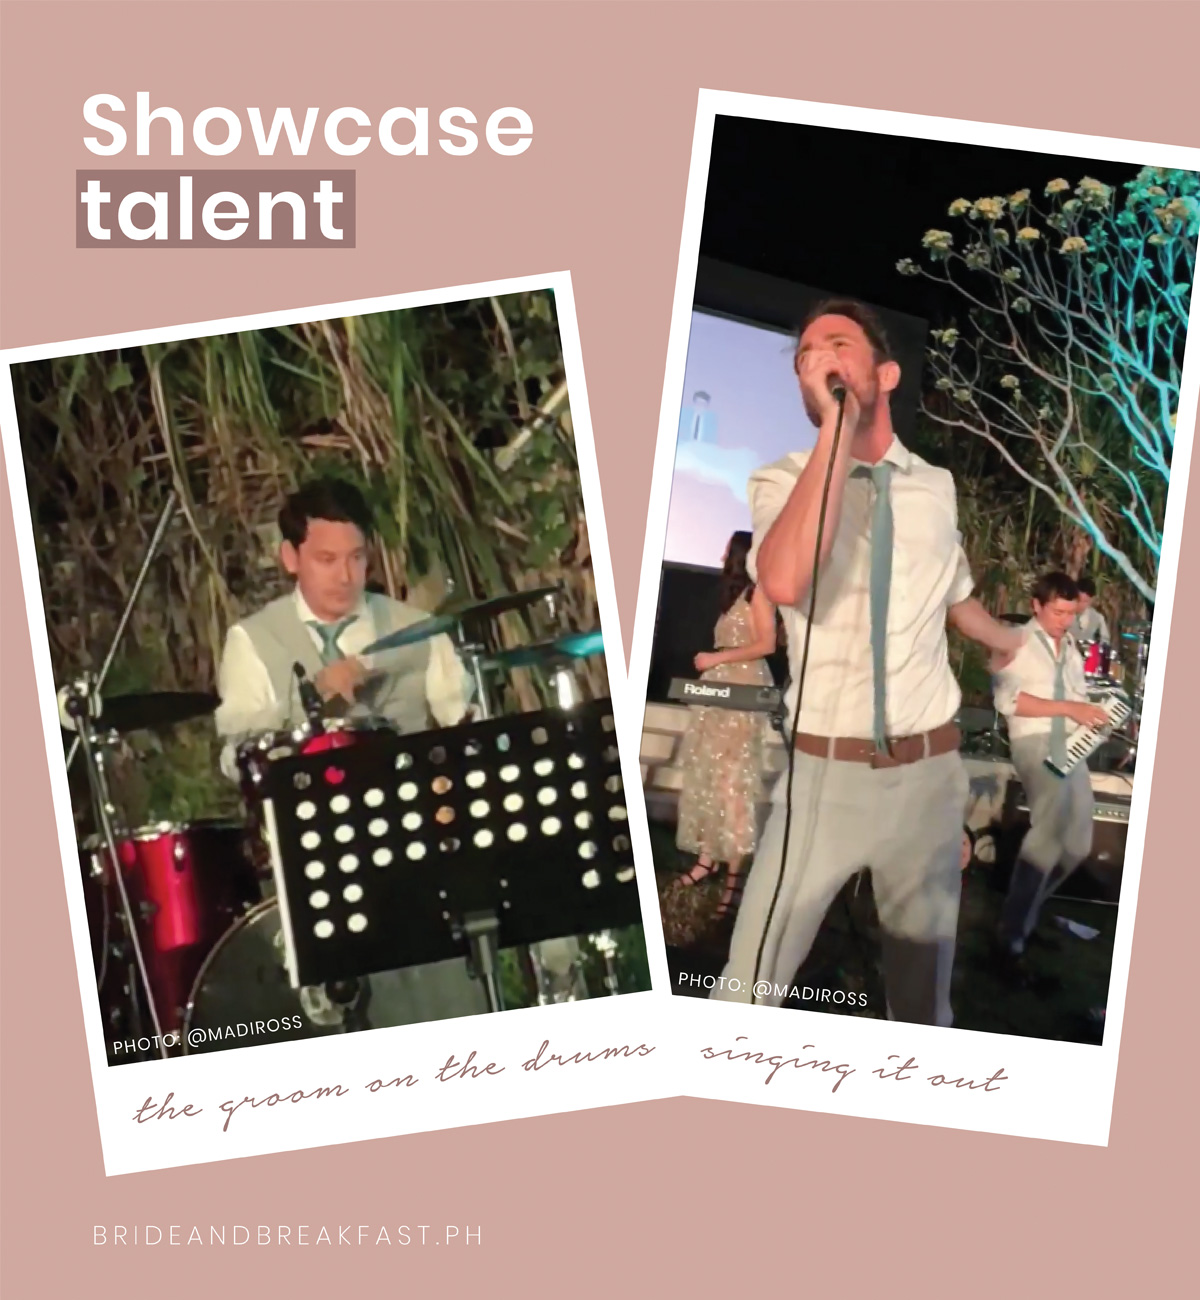 Showcase talent